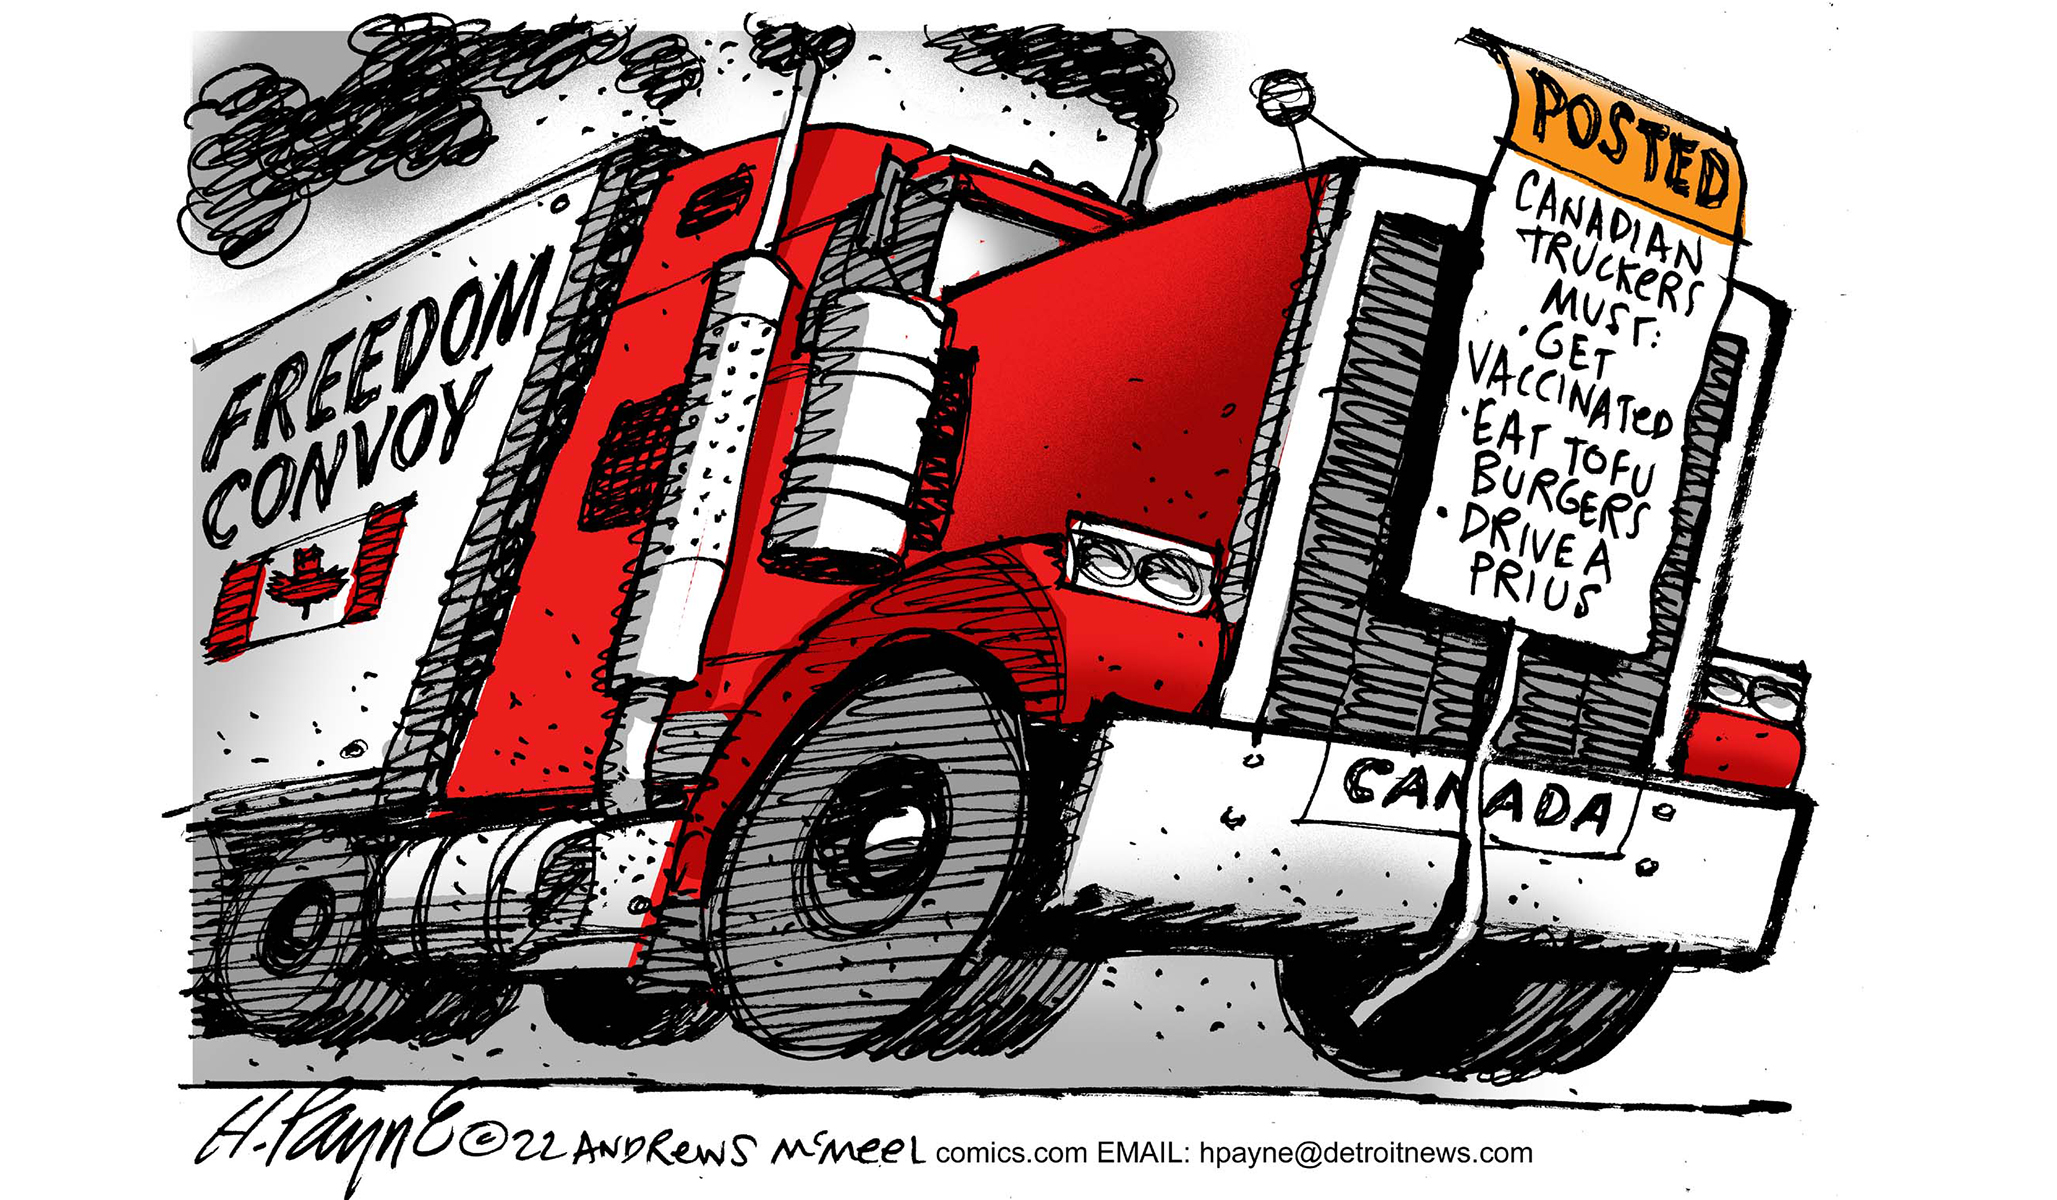 convoy truck cartoon